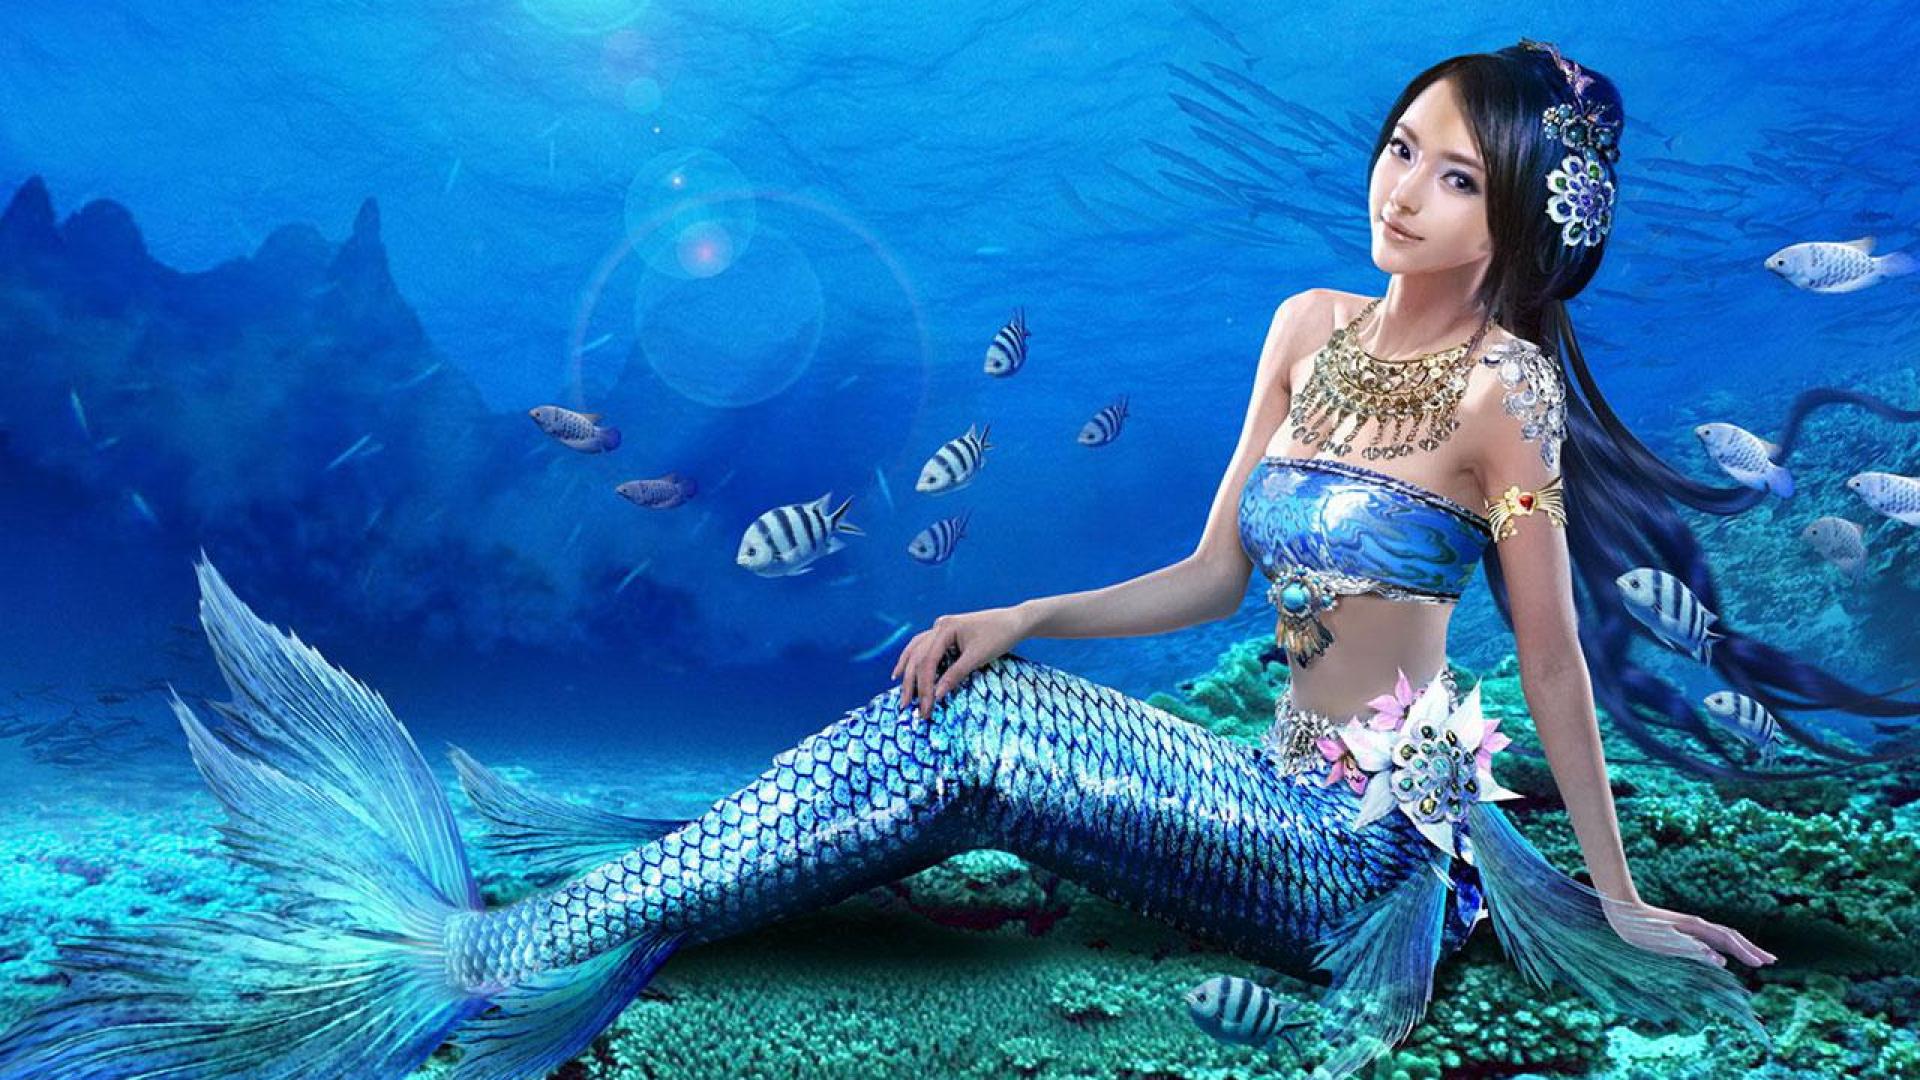 Mermaid HD wallpaper  creative and fantasy  Wallpaper Better